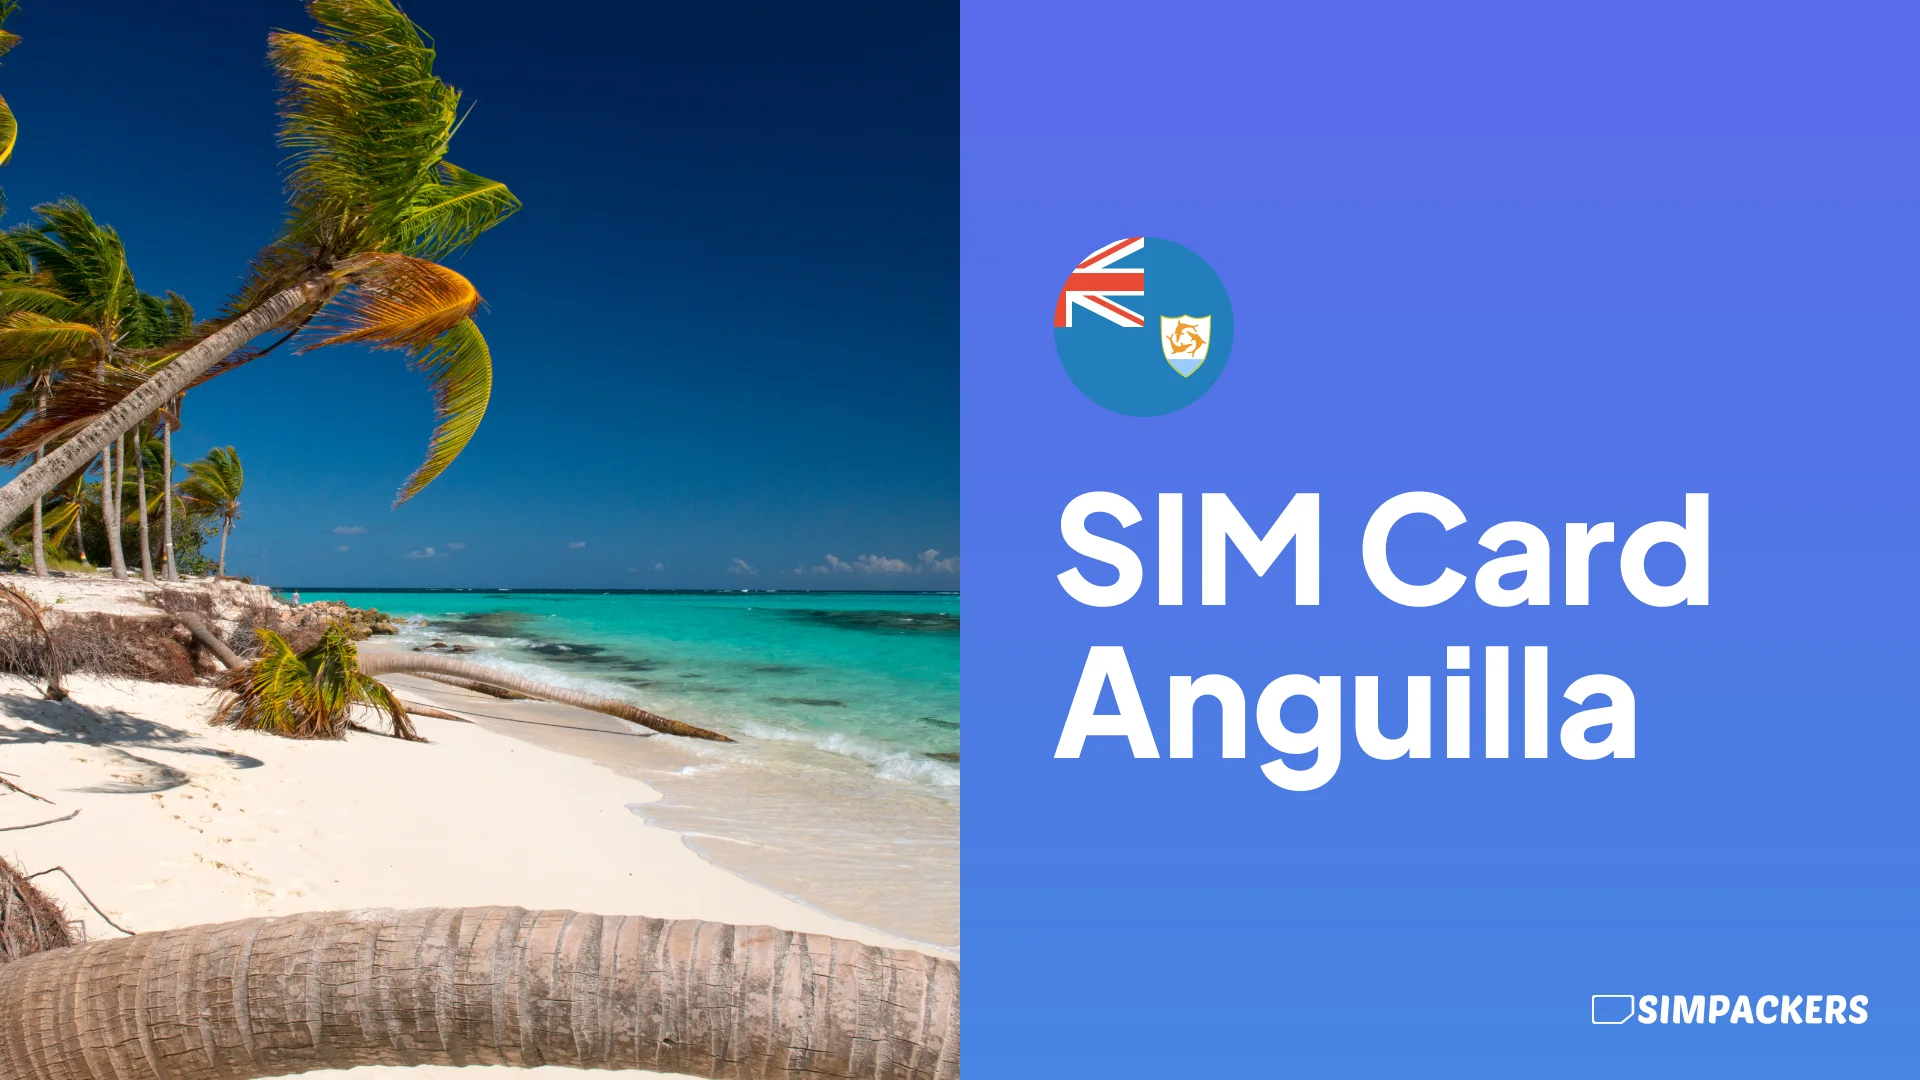 EN/FEATURED_IMAGES/sim-card-anguilla.webp